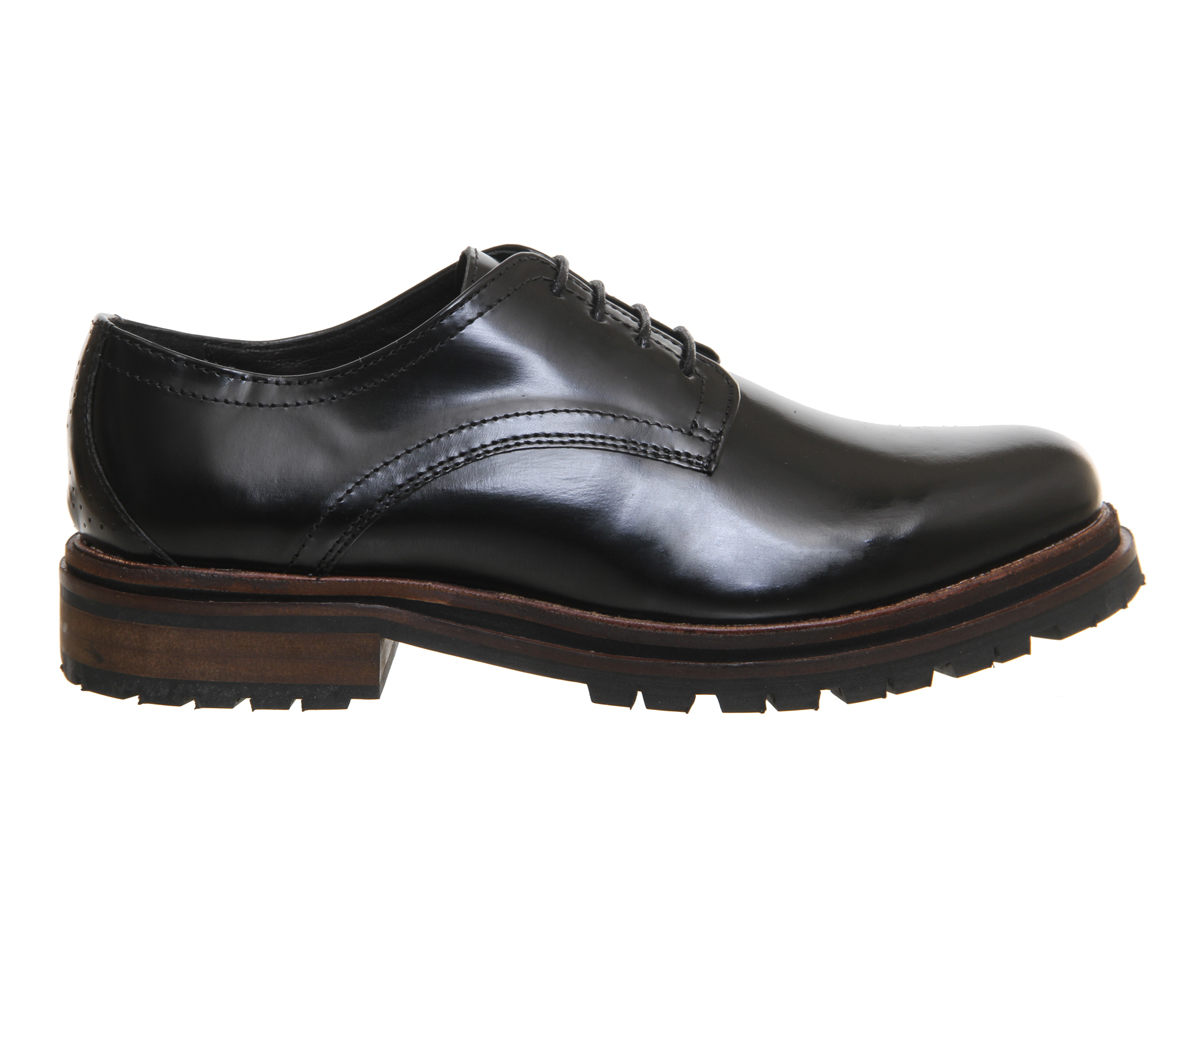 Hudson London Hollin Brogues Black Hi Shine Leather - Flat Shoes for Women